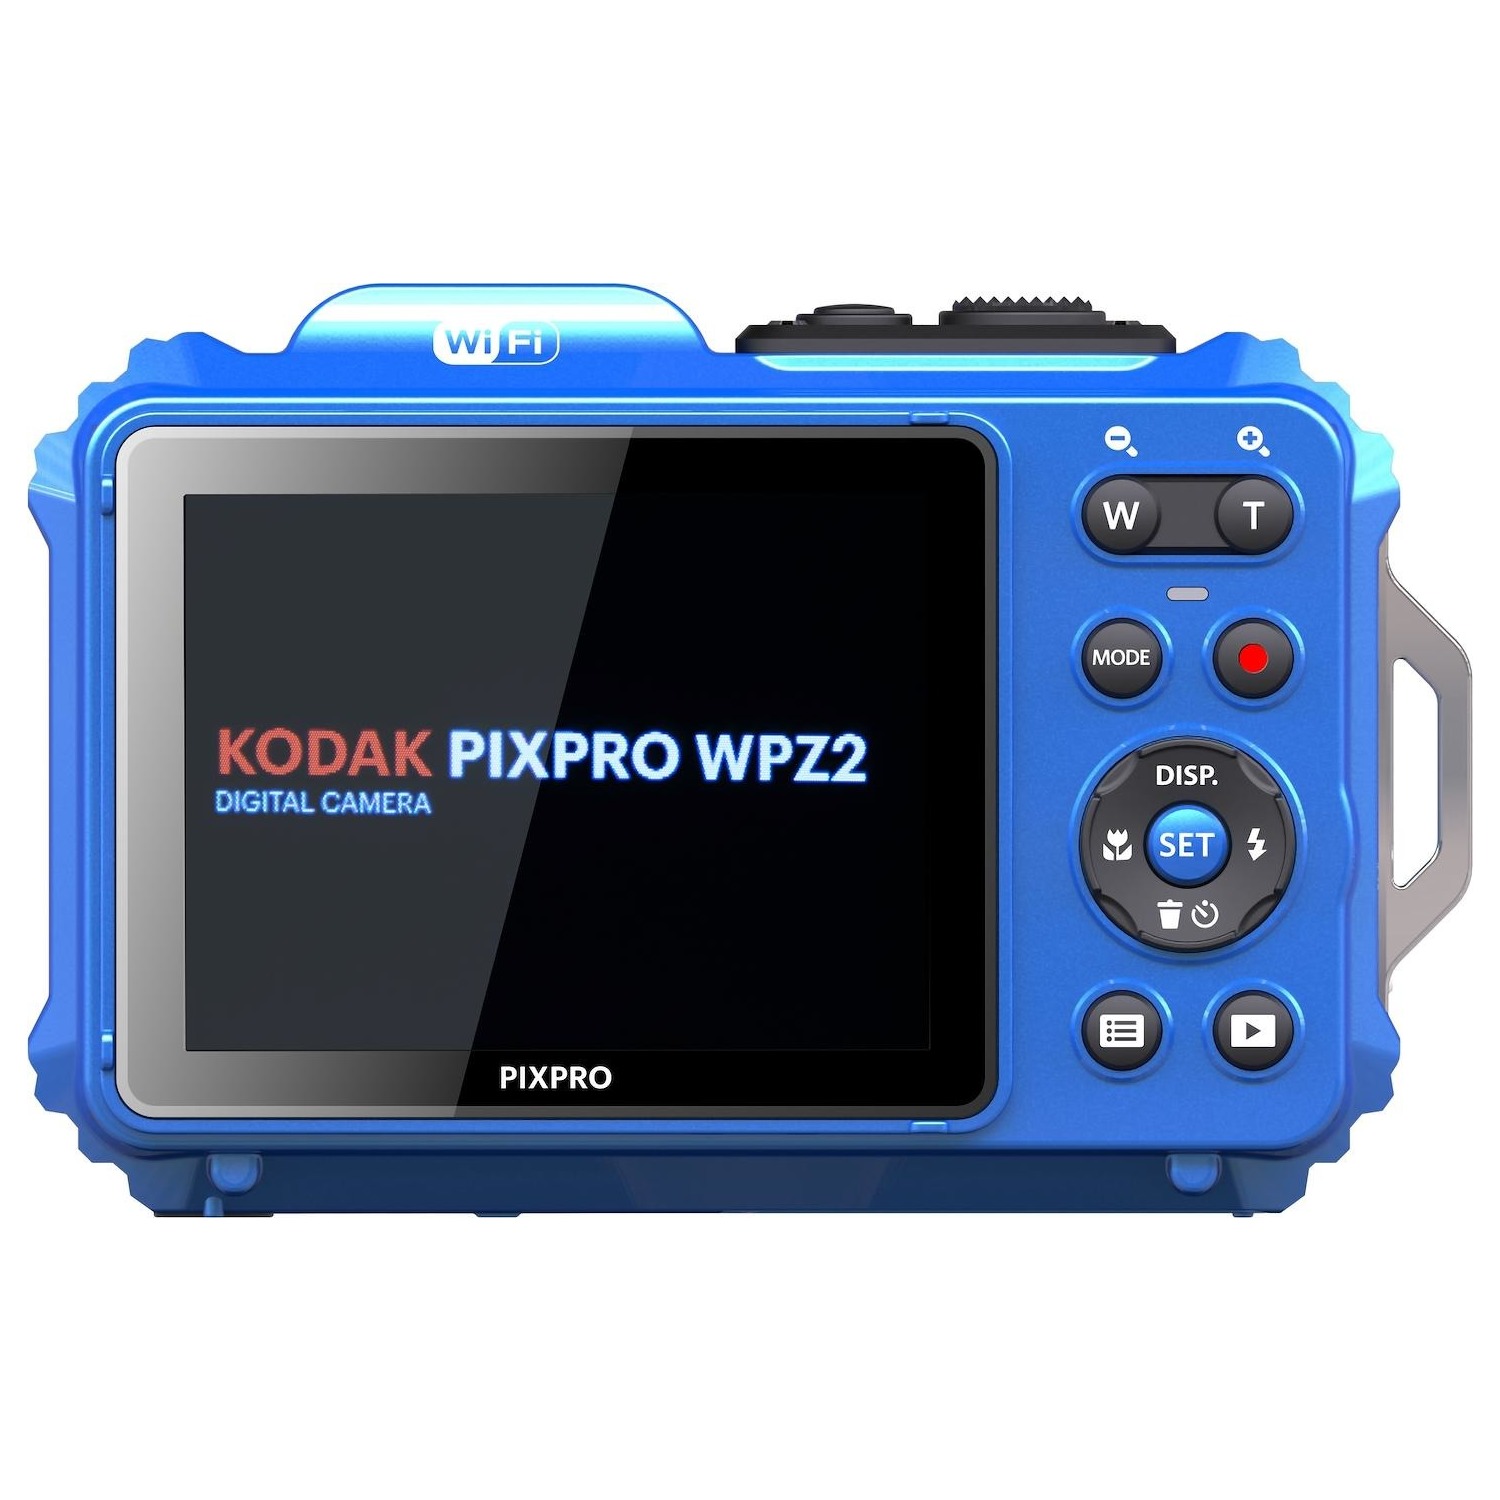 Fotocamera subacquea Kodak KFWPBL colore blu - DIMOStore